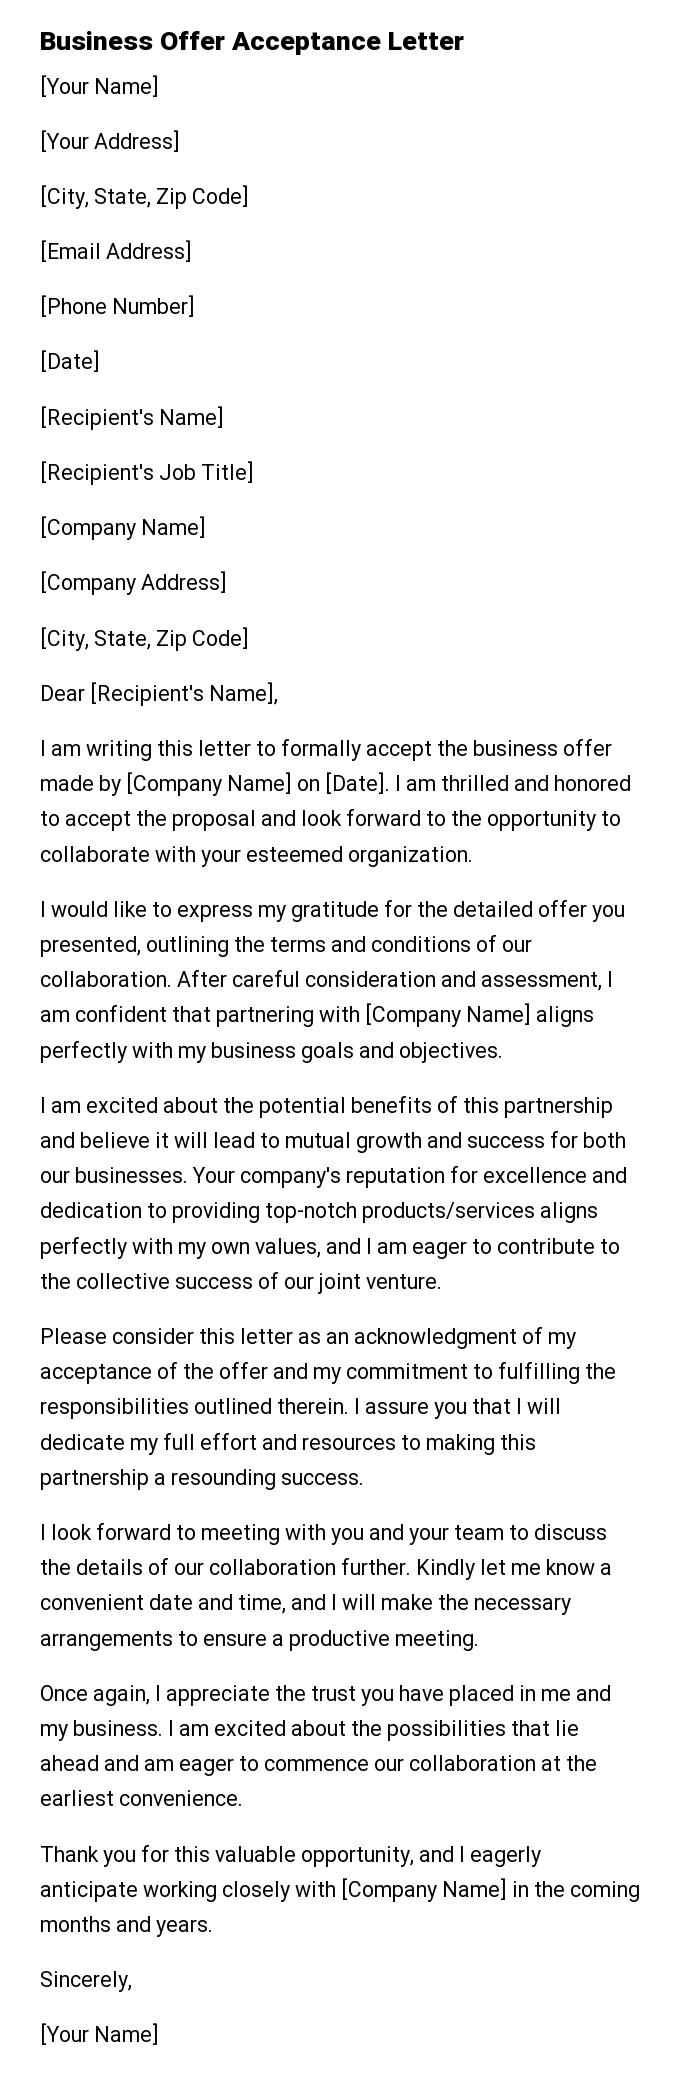 Business Offer Acceptance Letter